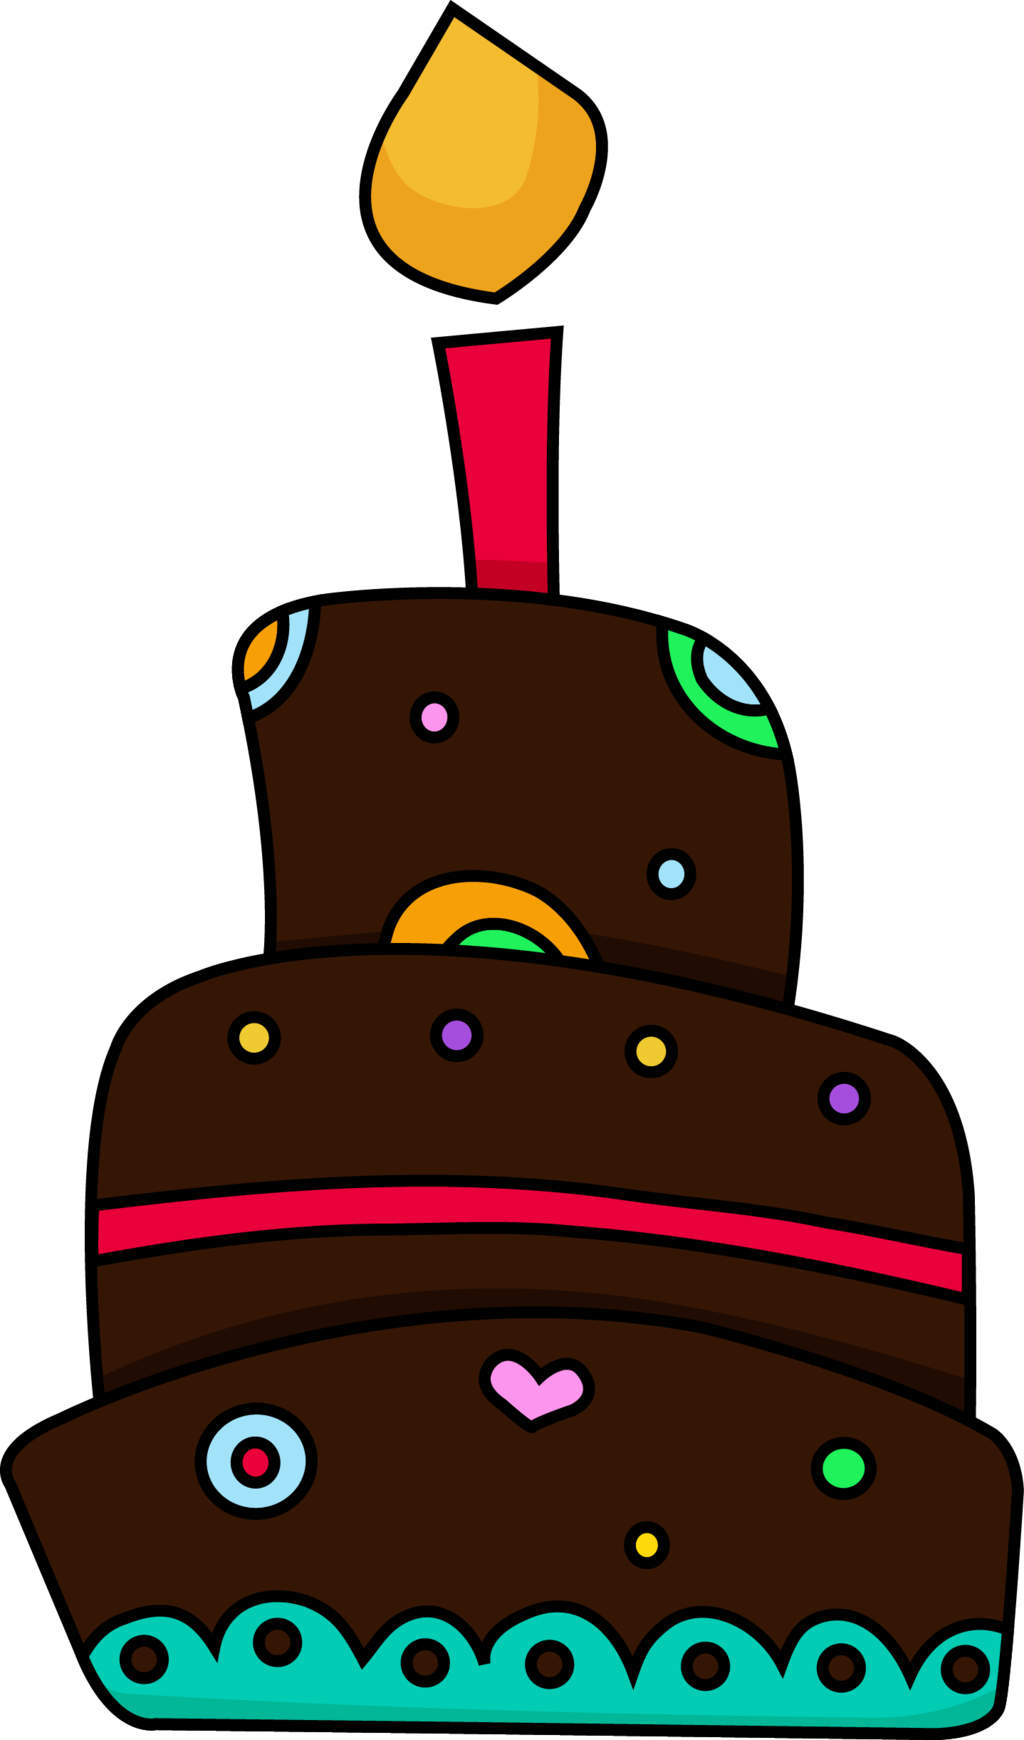 Cake Birthday Cake Clip Art Birthday Cake Images Birthday Cake